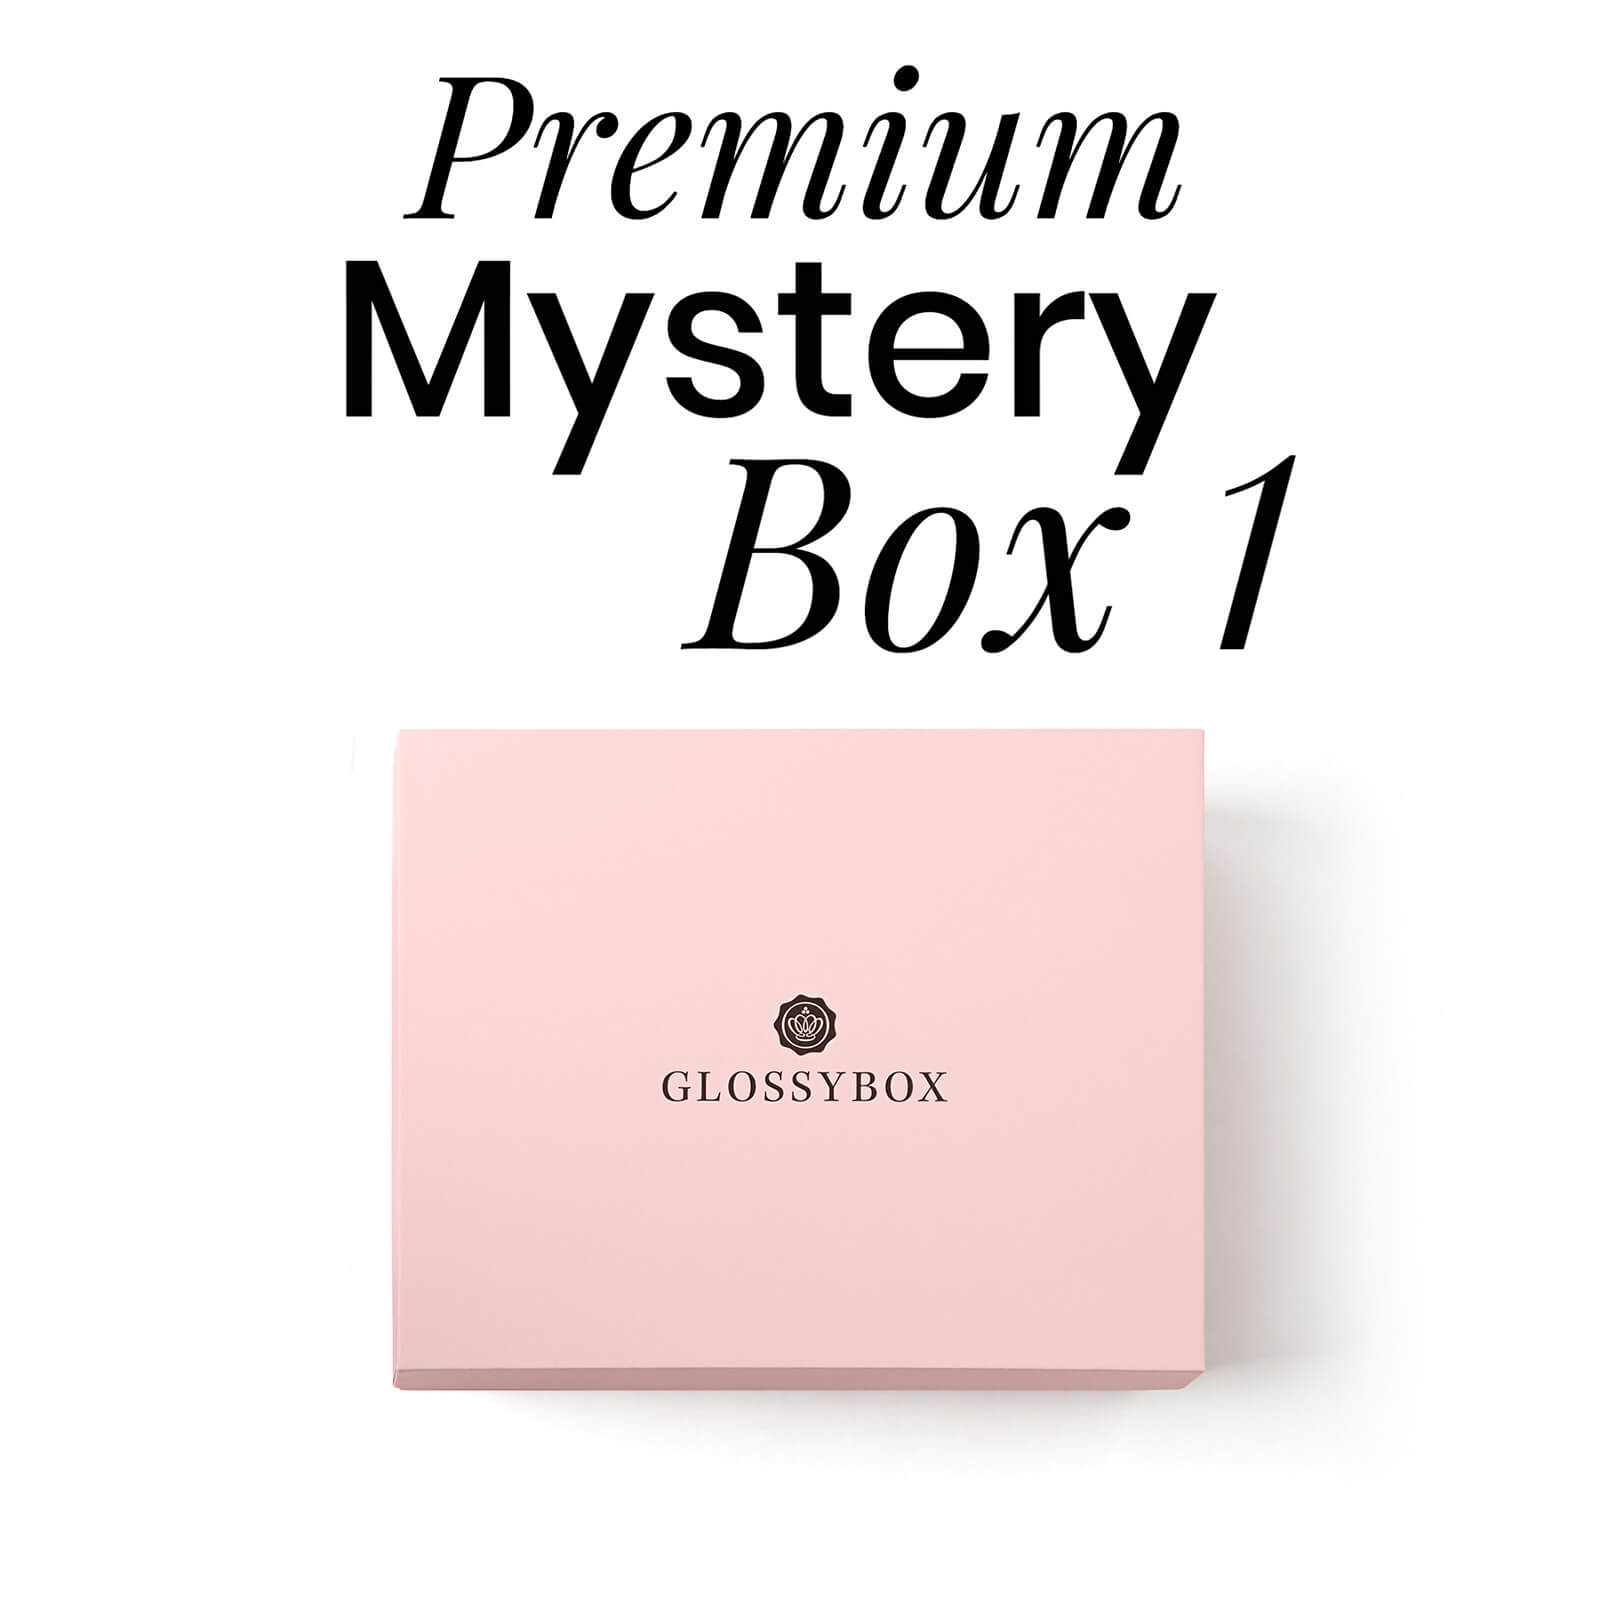 Glossy Box coupon: GLOSSYBOX Premium Mystery Box 1